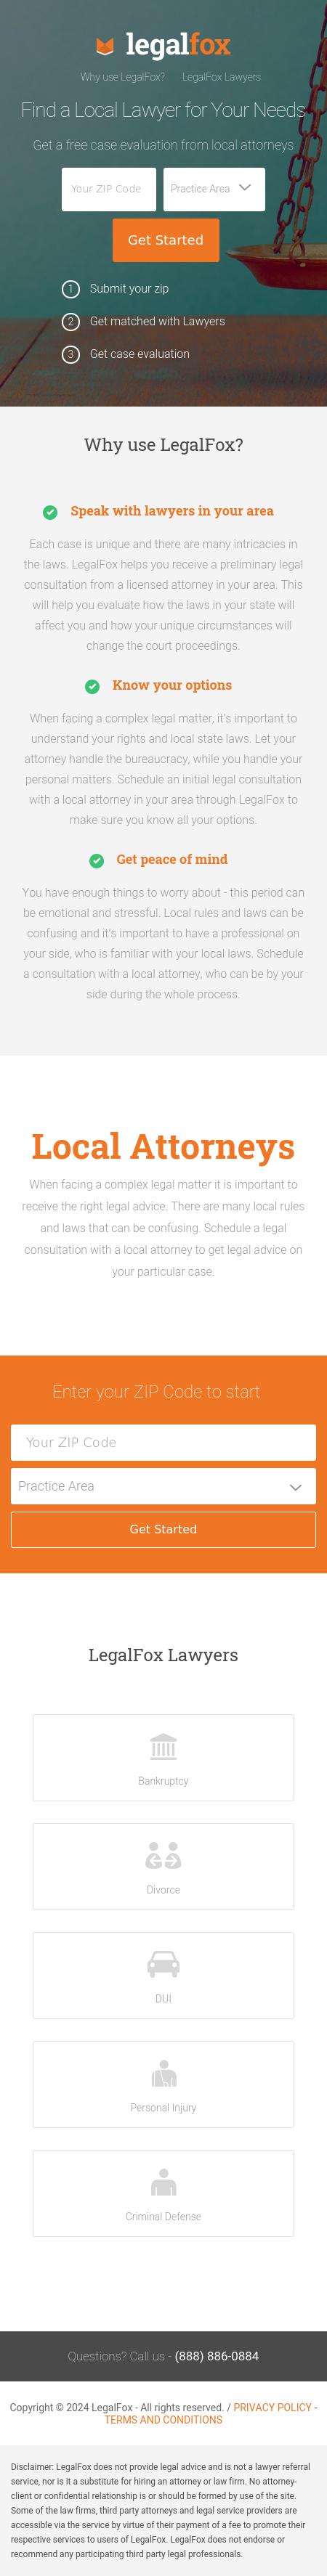 Find a Local Attorney - West Palm Beach FL Lawyers